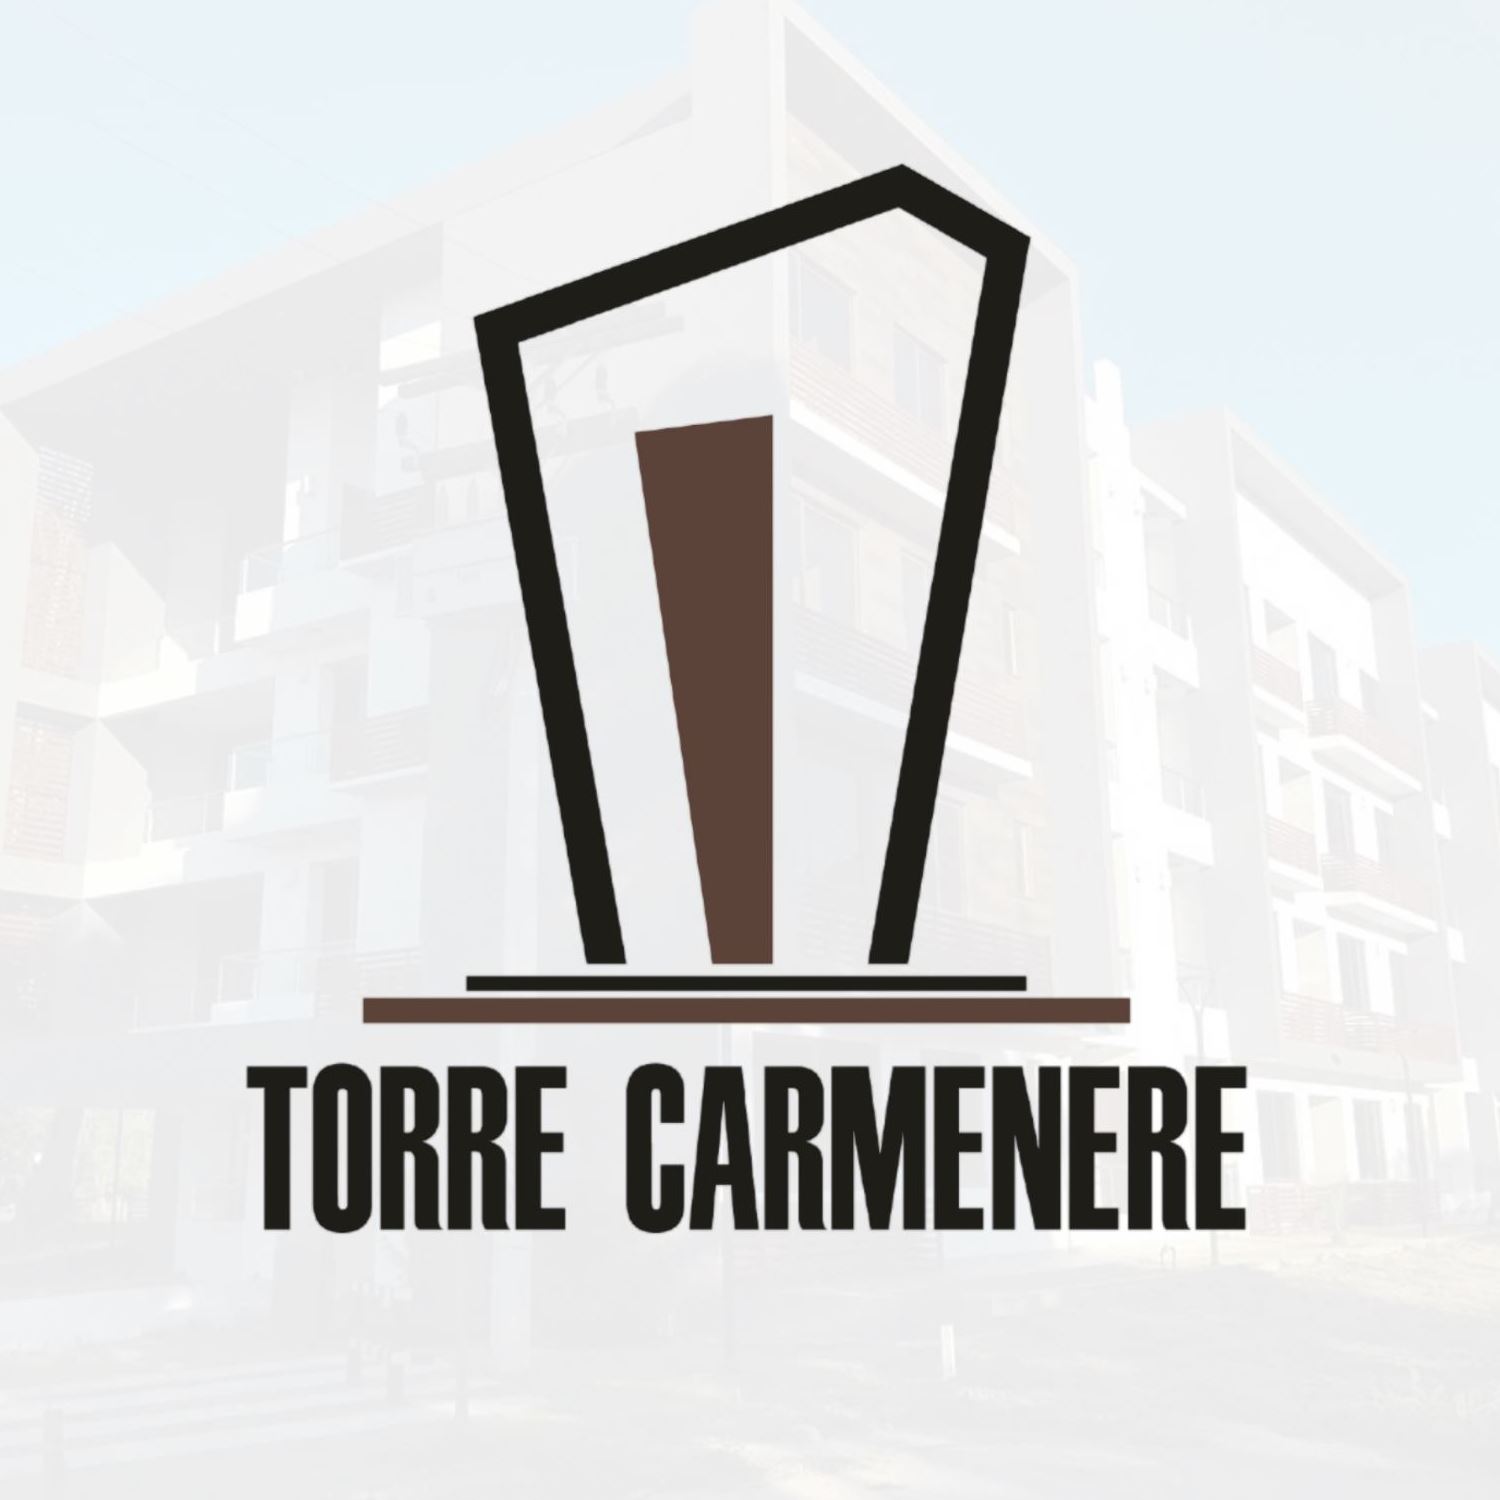 Torre Carmenere